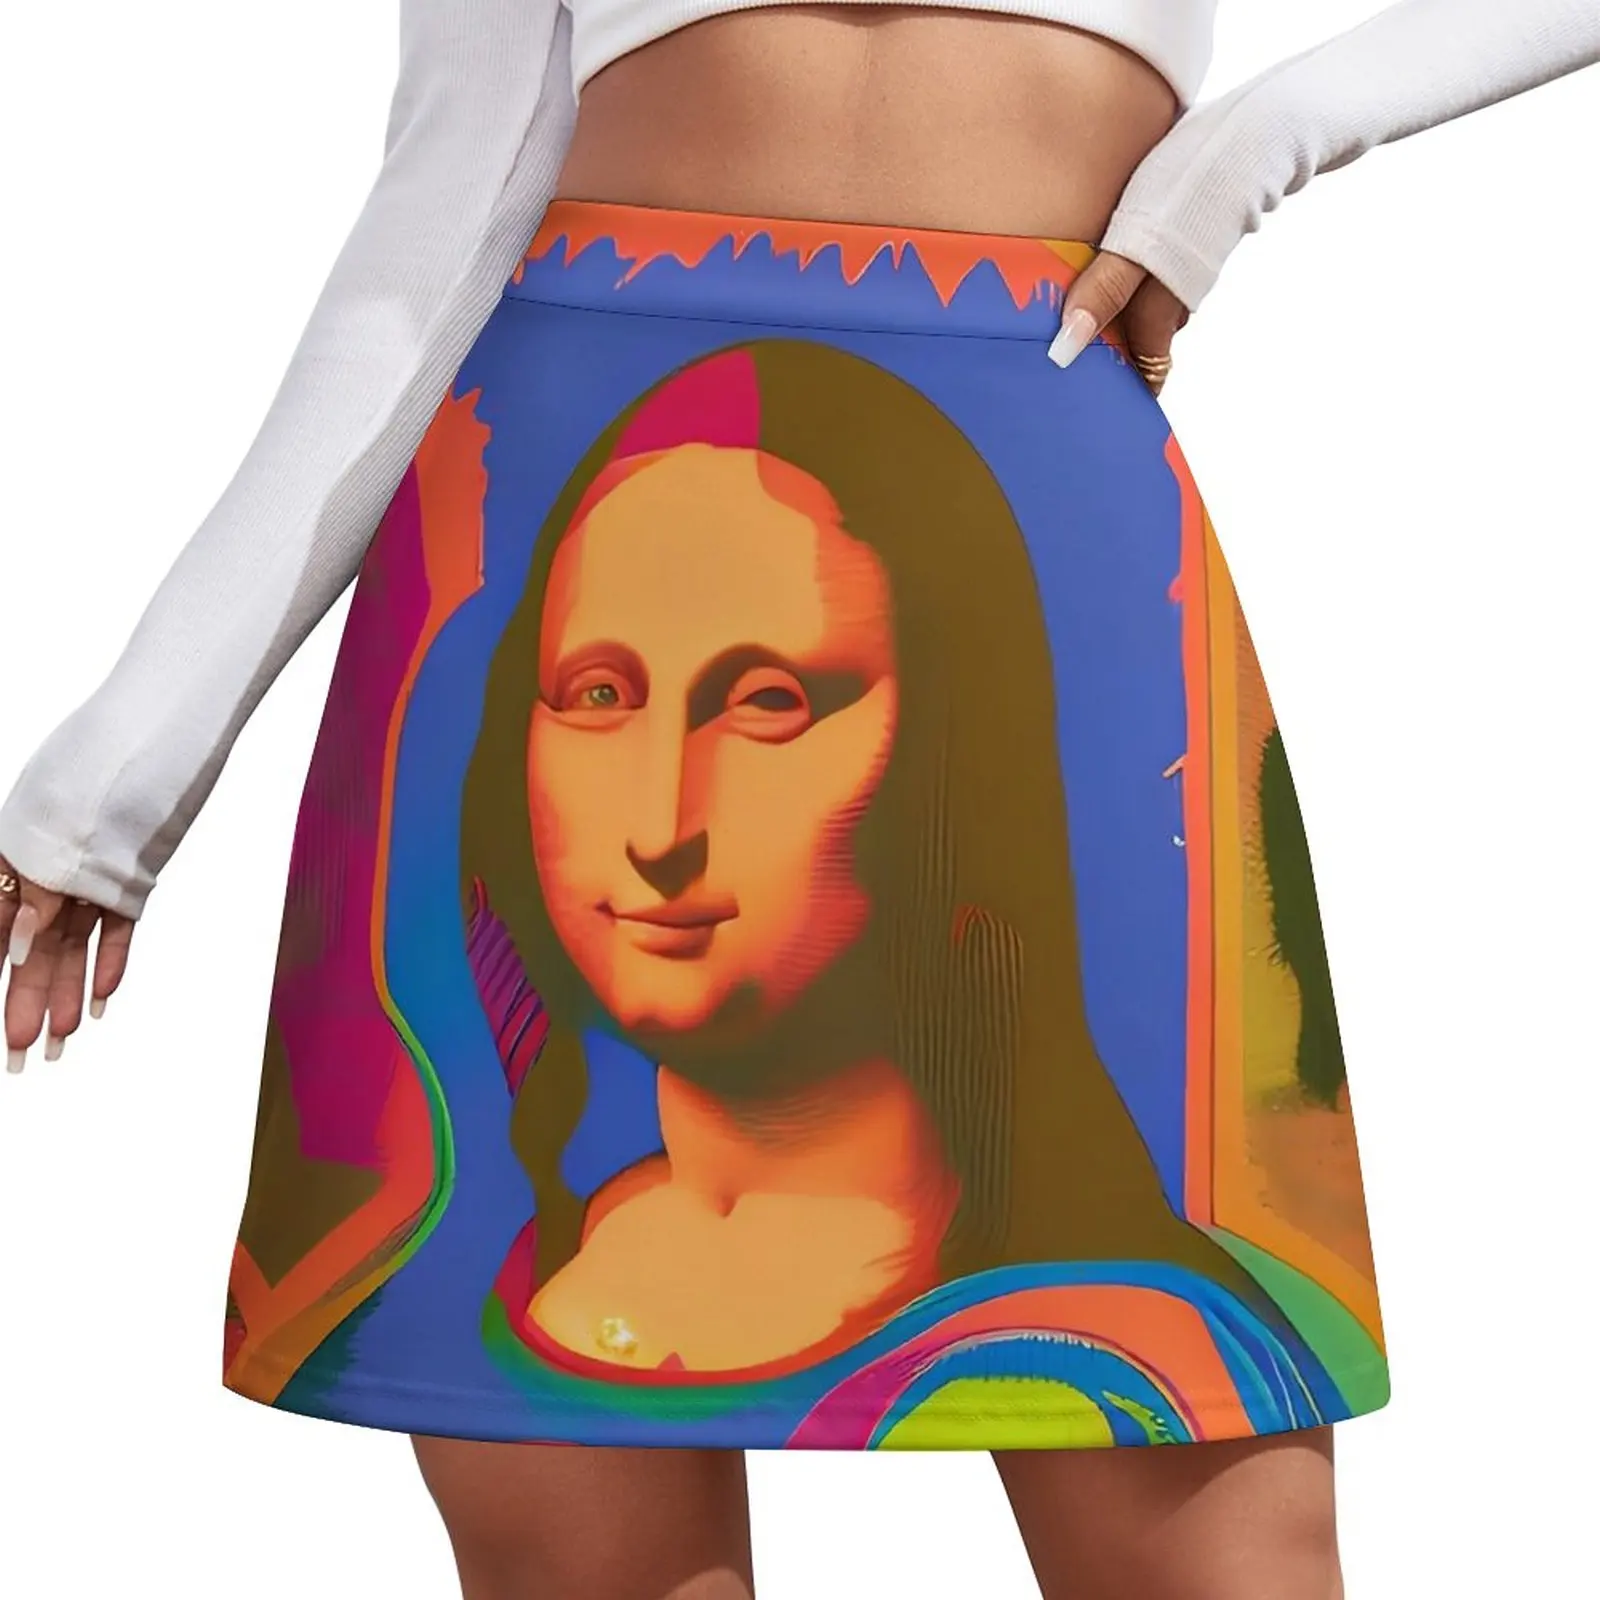 

Mona Lisa Skirt Colorful Art Street Fashion Casual Skirts Women Cute Mini Skirt Design Bottoms Gift Idea